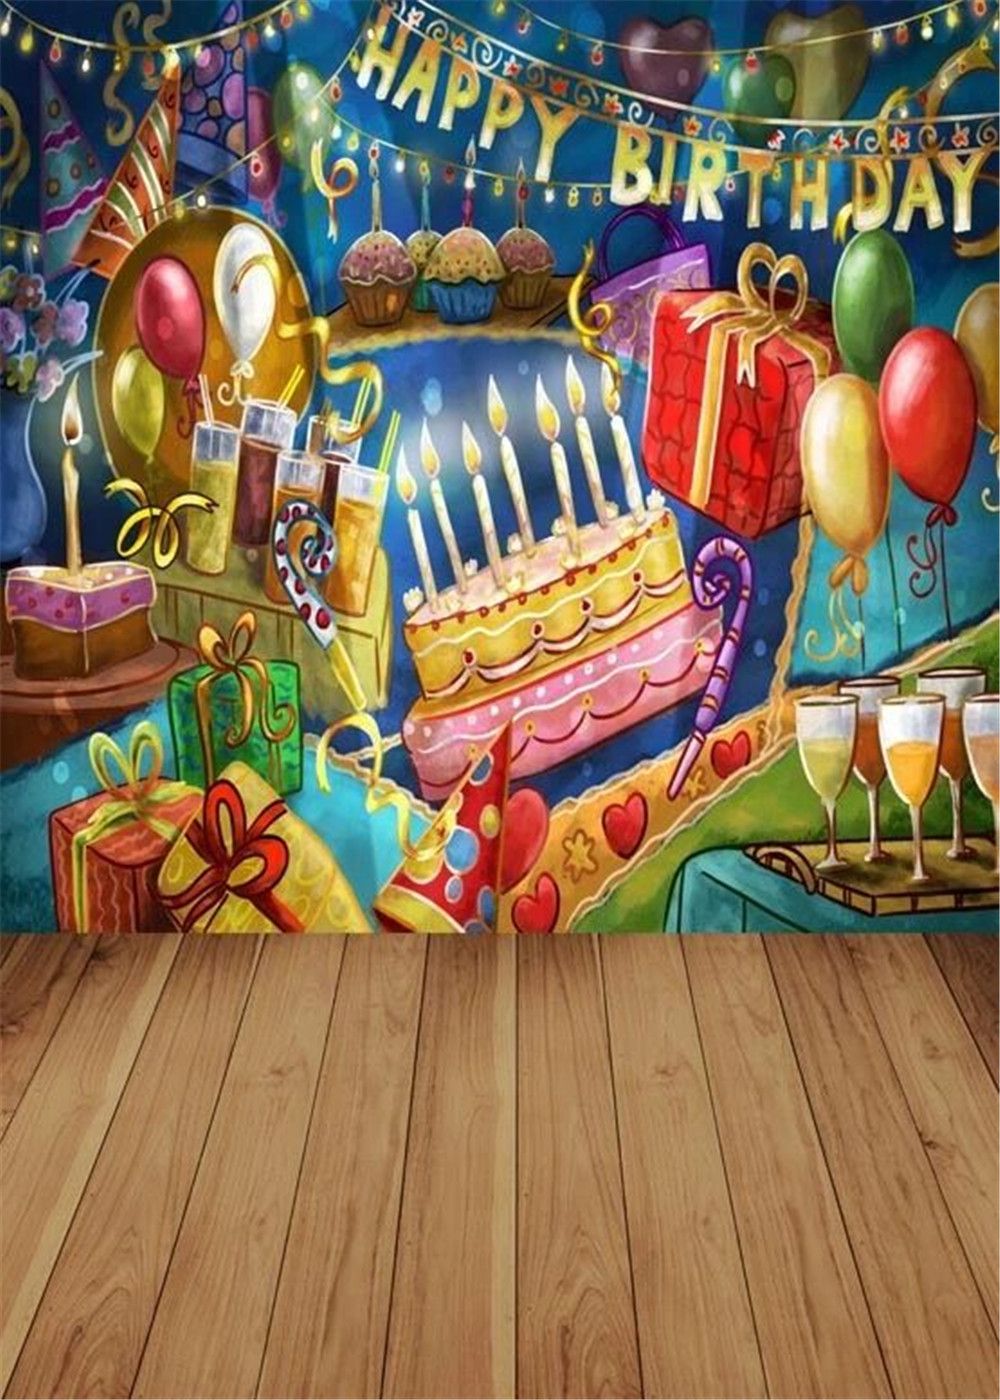 Graffiti Wall Happy Birthday Photography Backdrops Vinyl Printed Cake Gift  Boxes Balloons Children Photo Studio Background Wood Floor